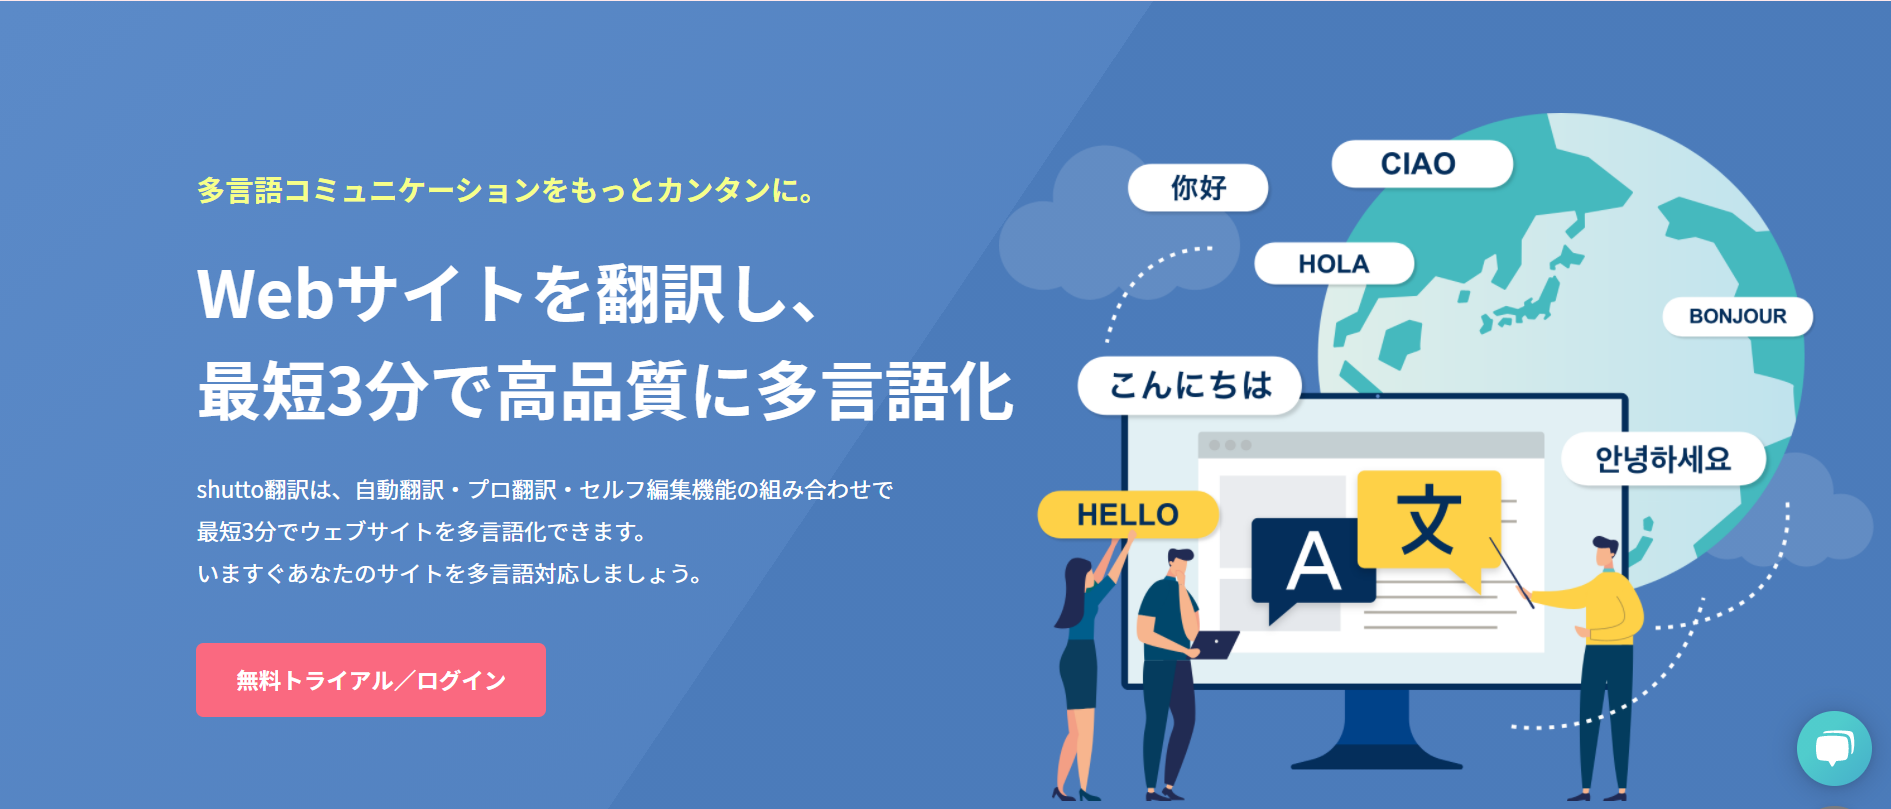 shutto翻訳公式サイトトップページ画像